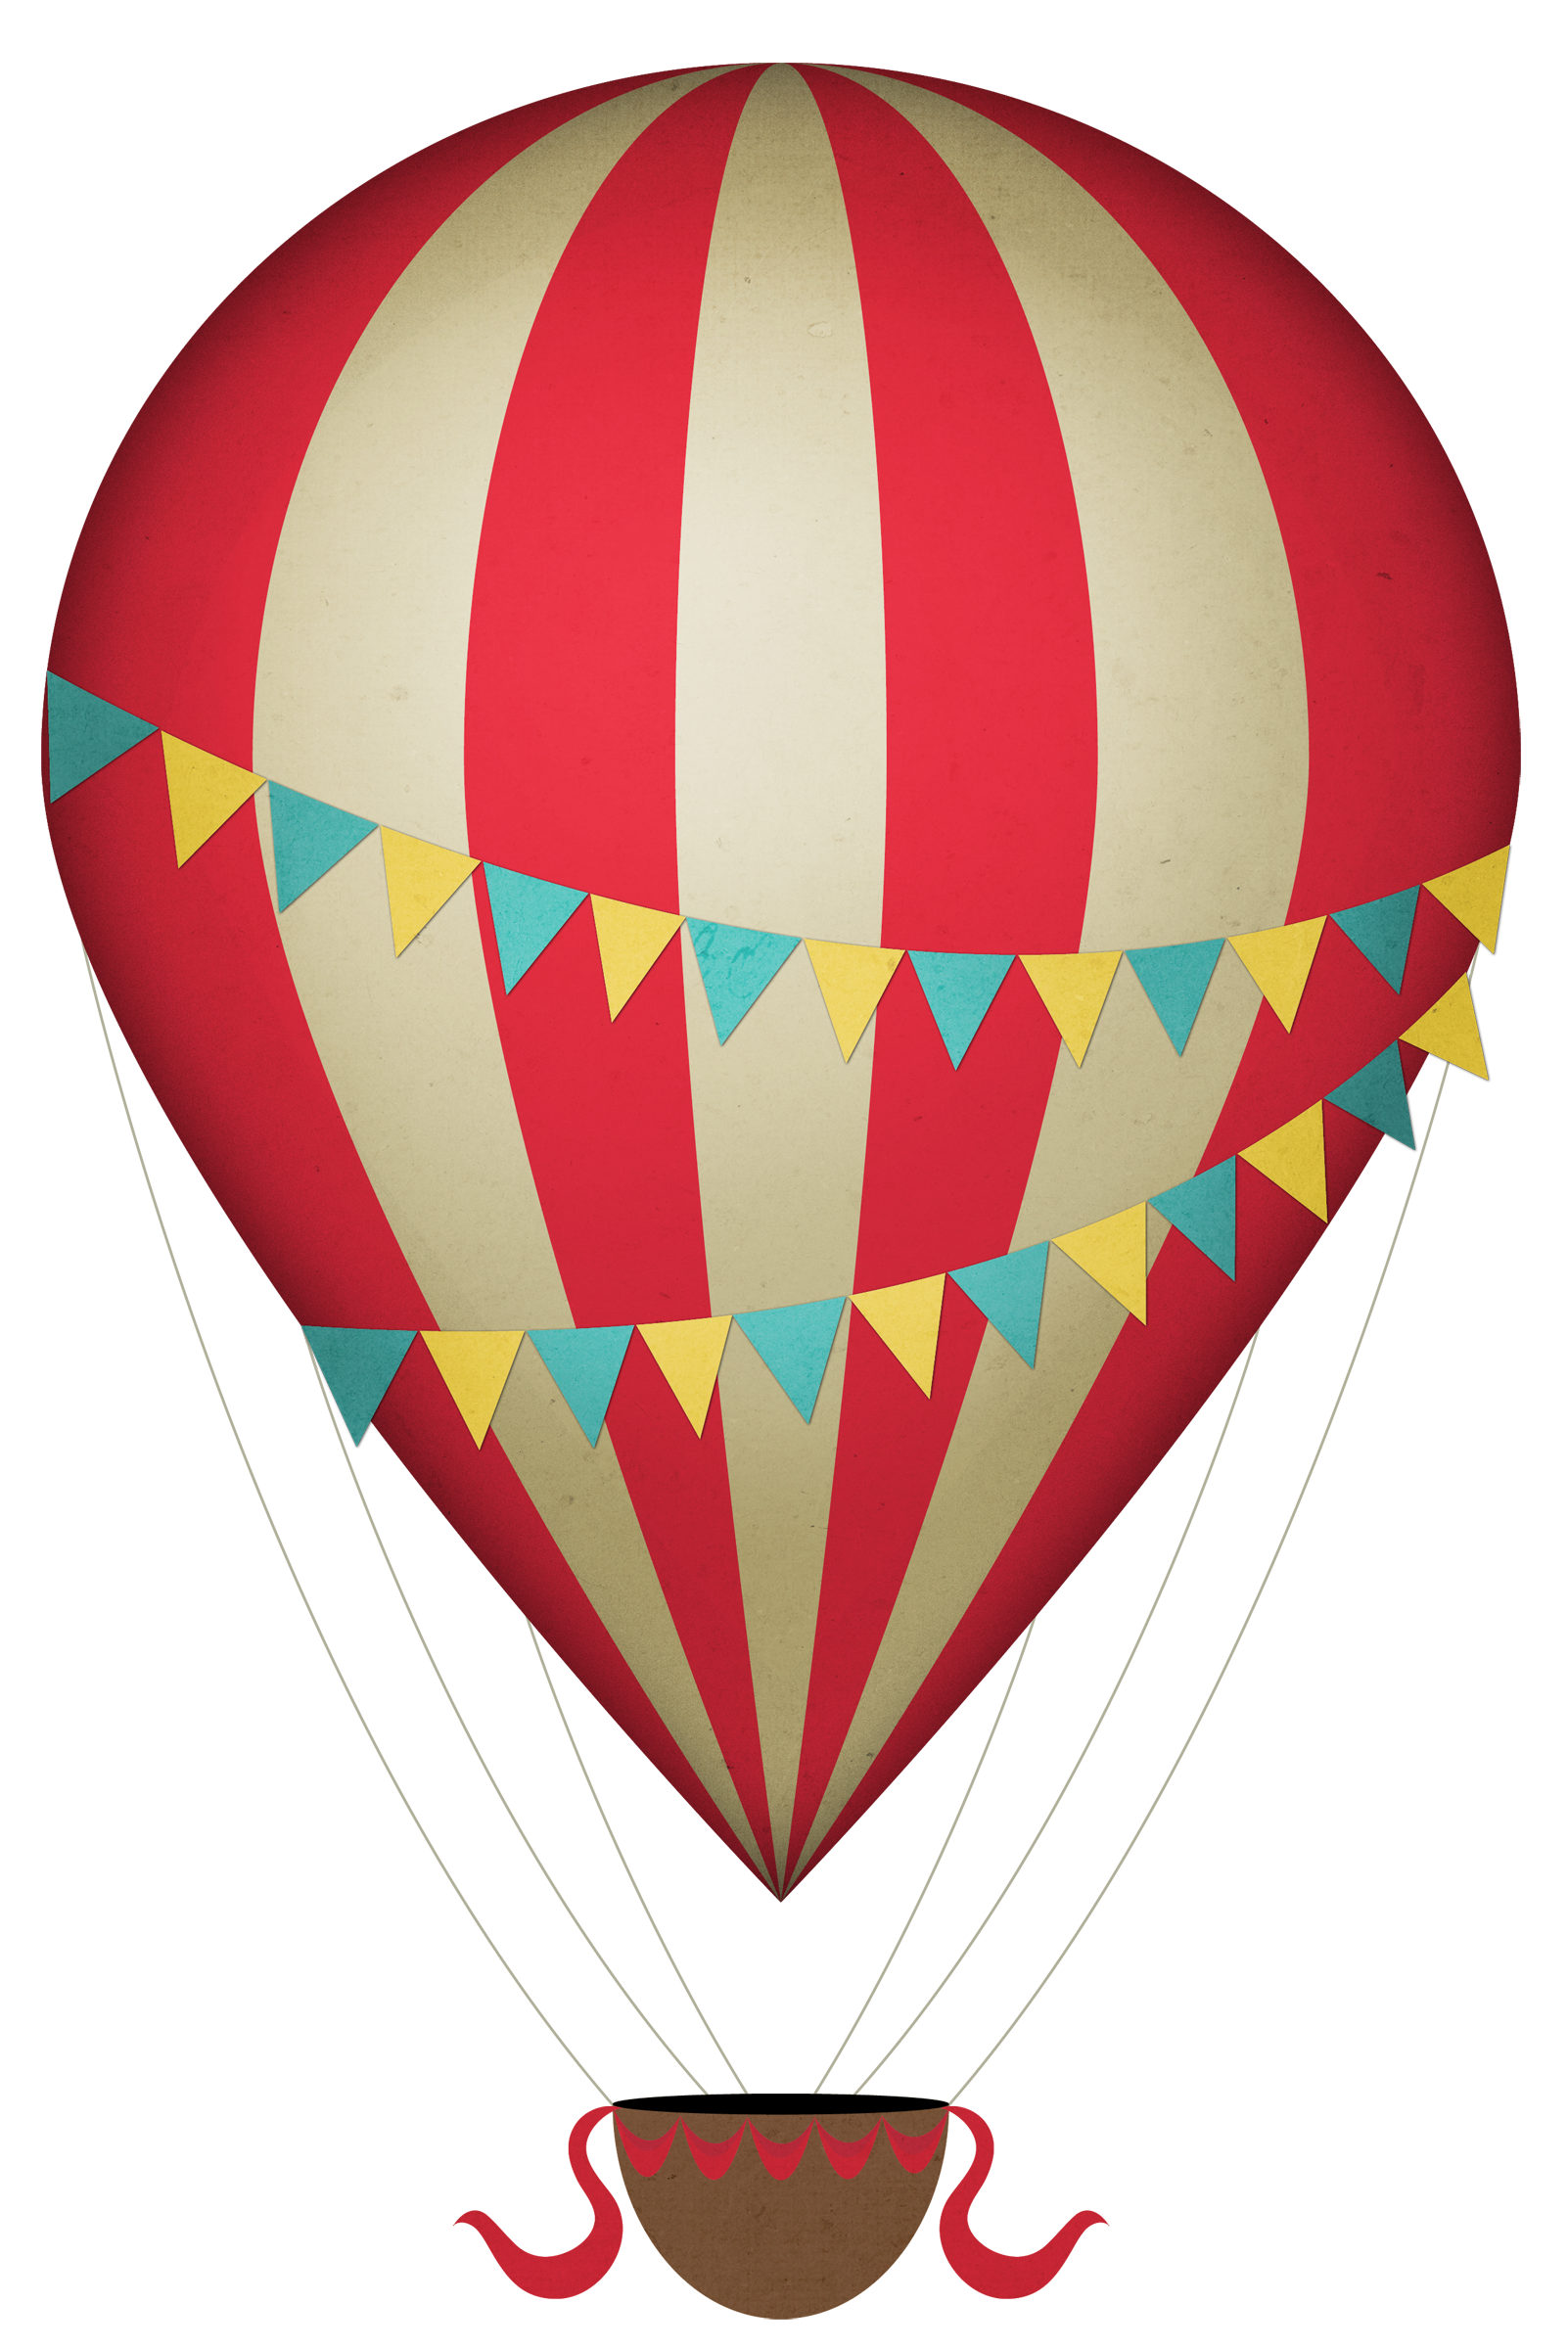 Balloon Drawing Image